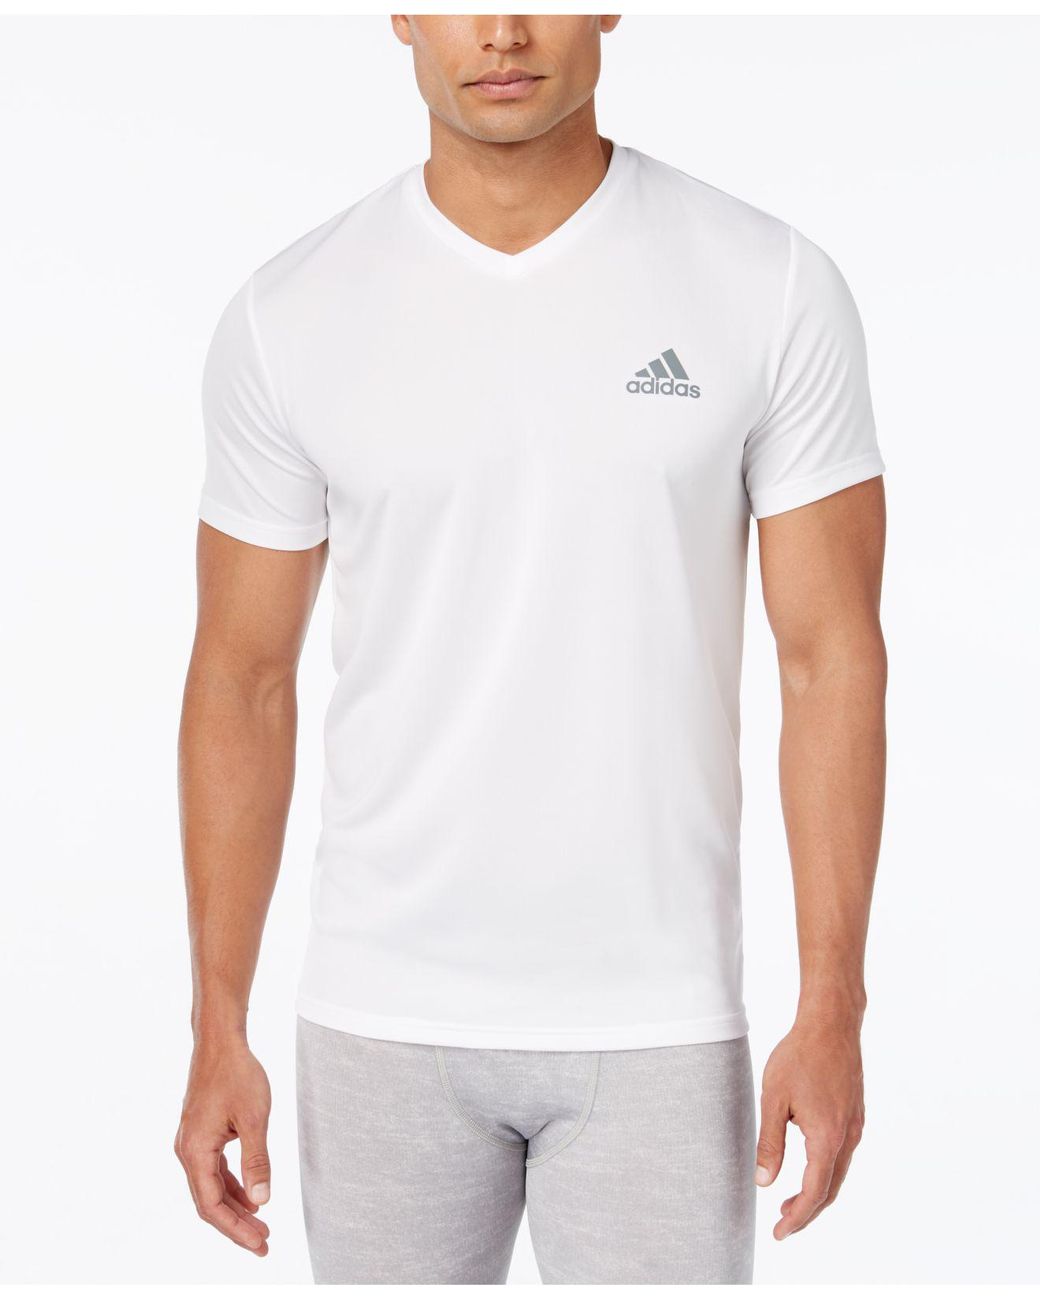 Adidas Men's T-Shirt - White - L